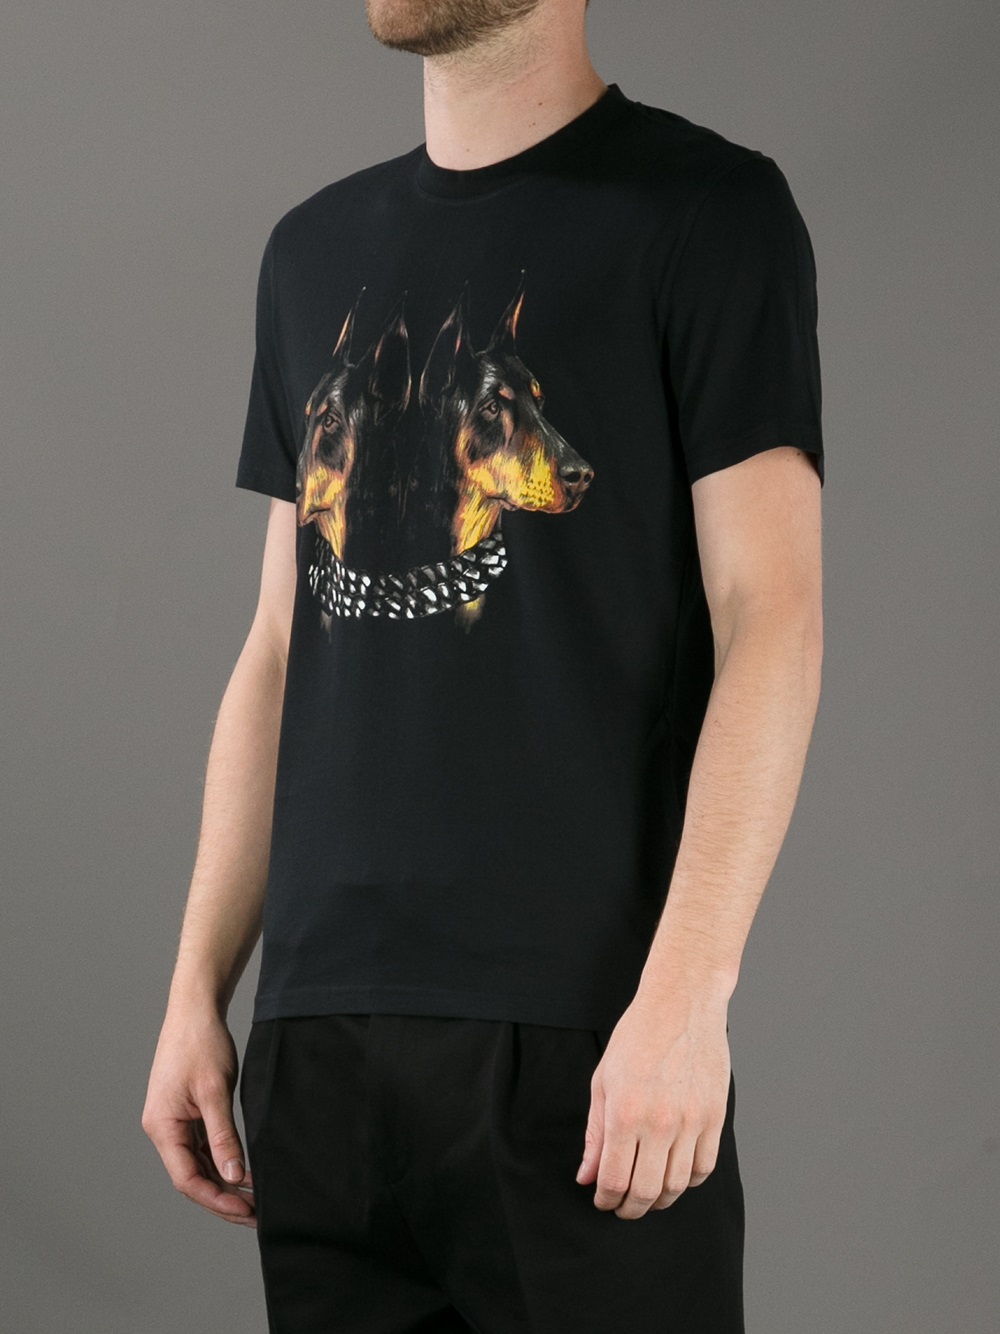 Givenchy Doberman Print Tshirt in Black for Men - Lyst